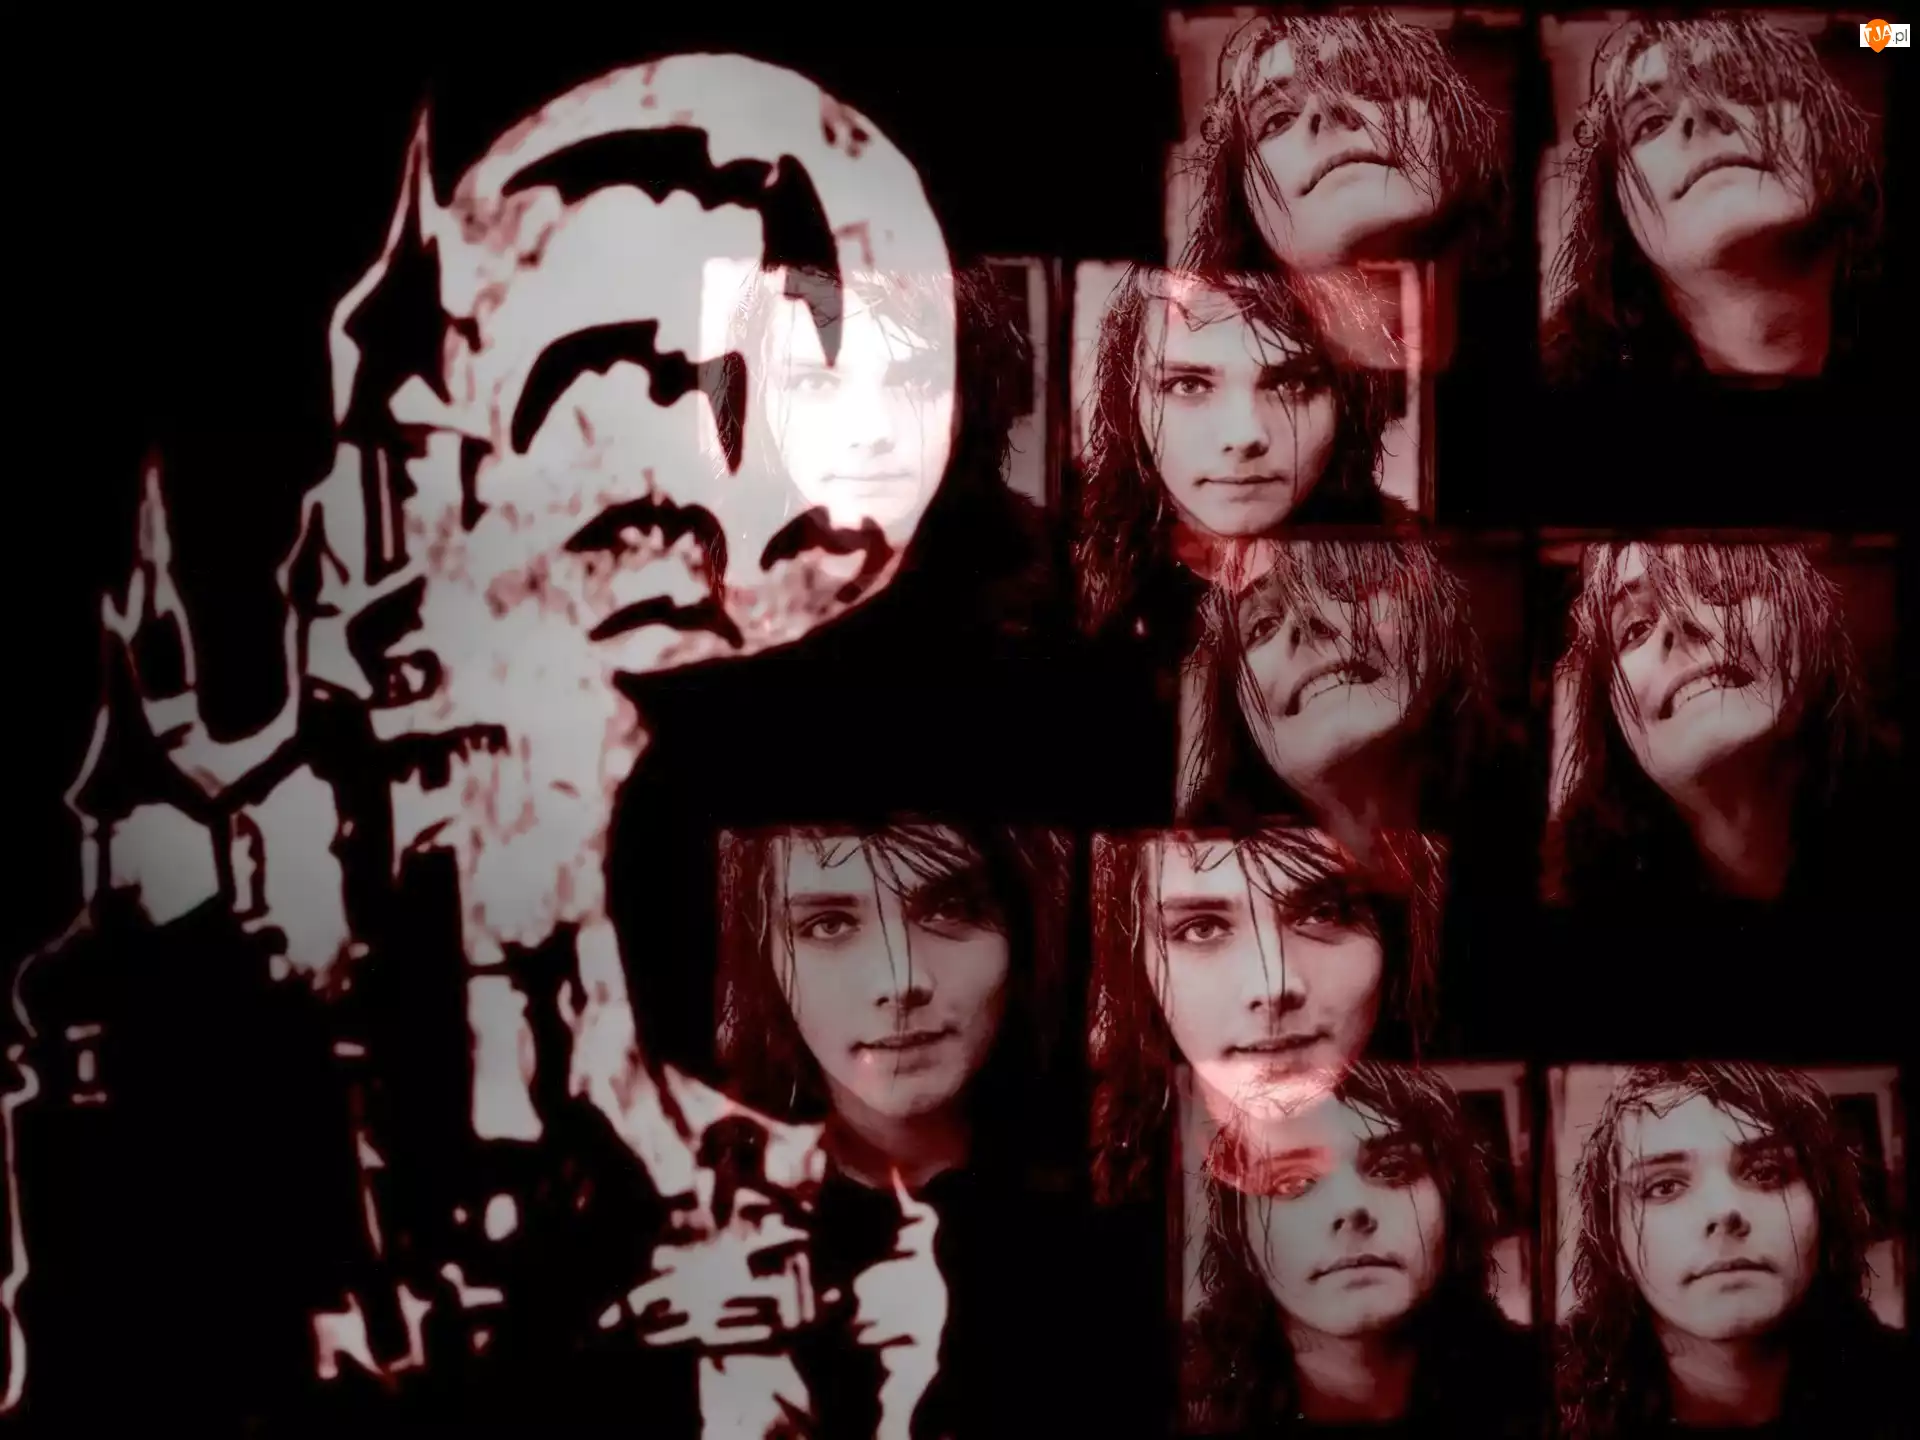 Gerard Way, My Chemical Romance